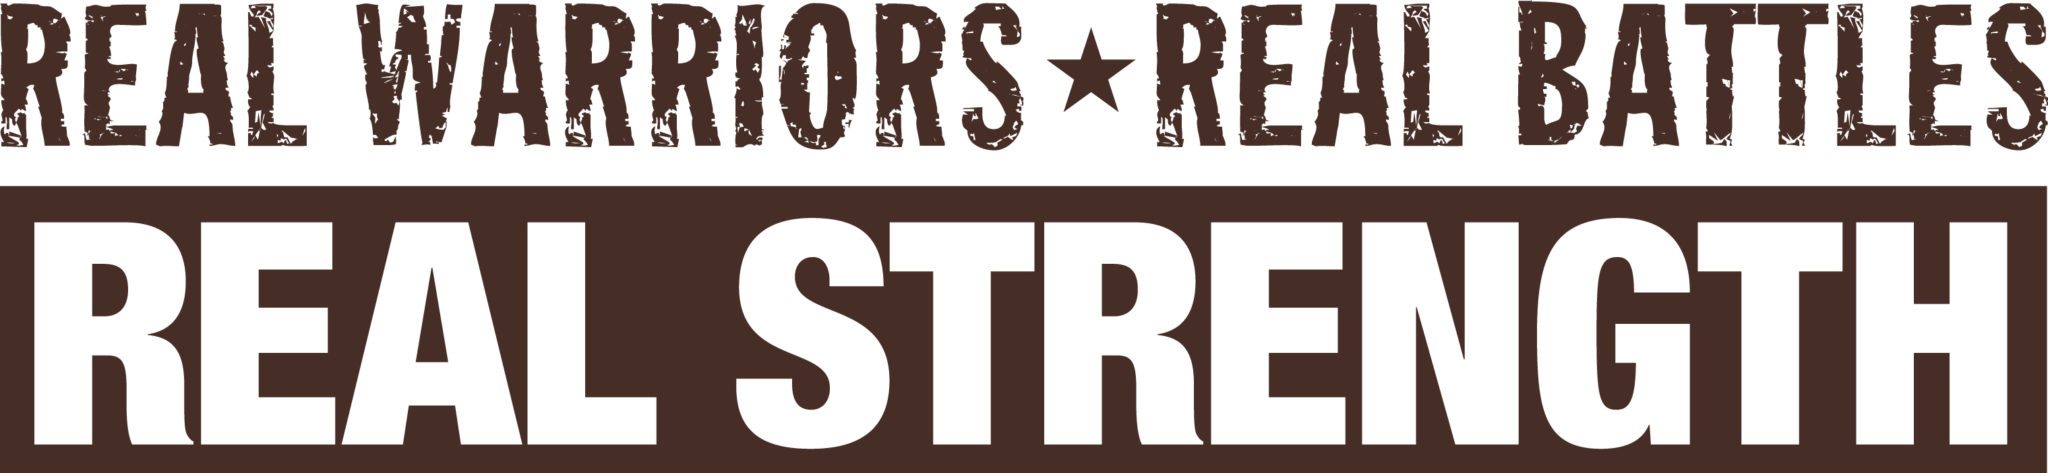 Real Warriors Real Battles Real Strength Logo